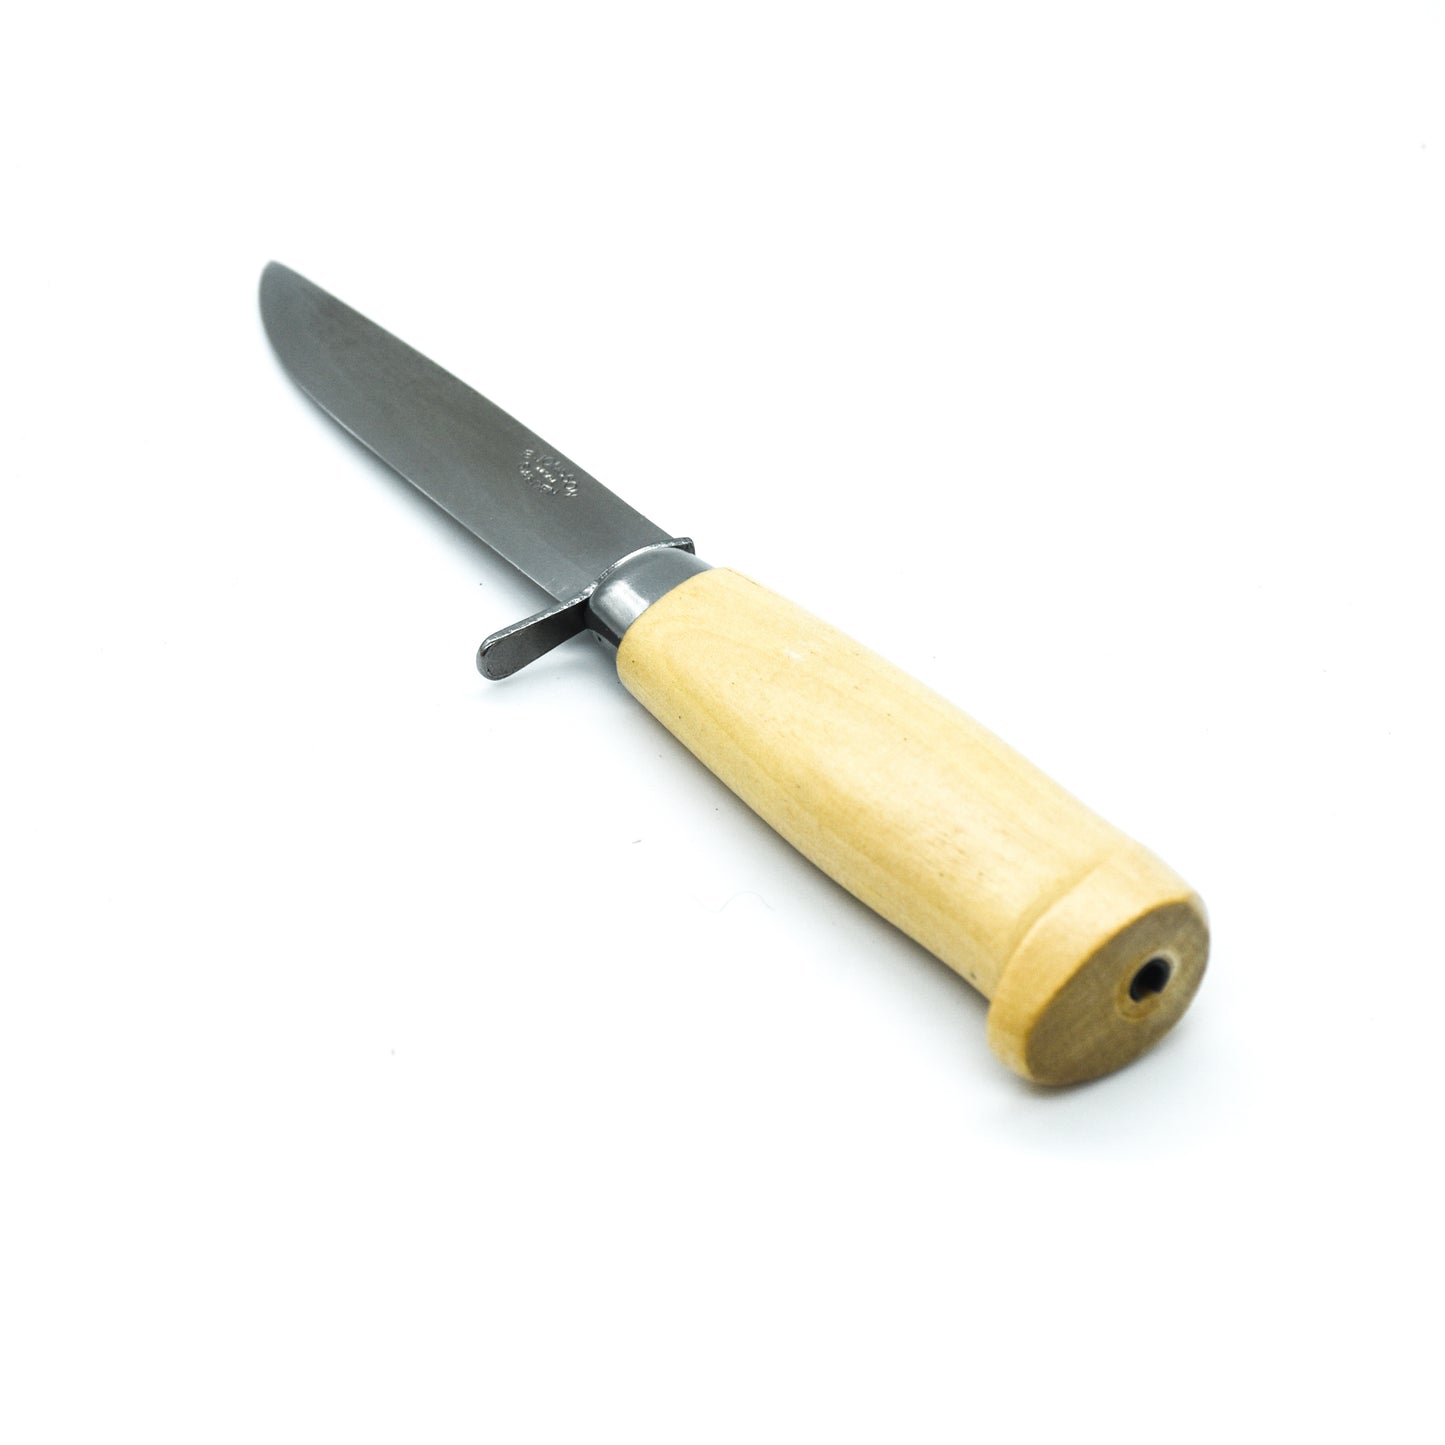 Vintage Whittling Knife - E.Jönsson - Standard Size